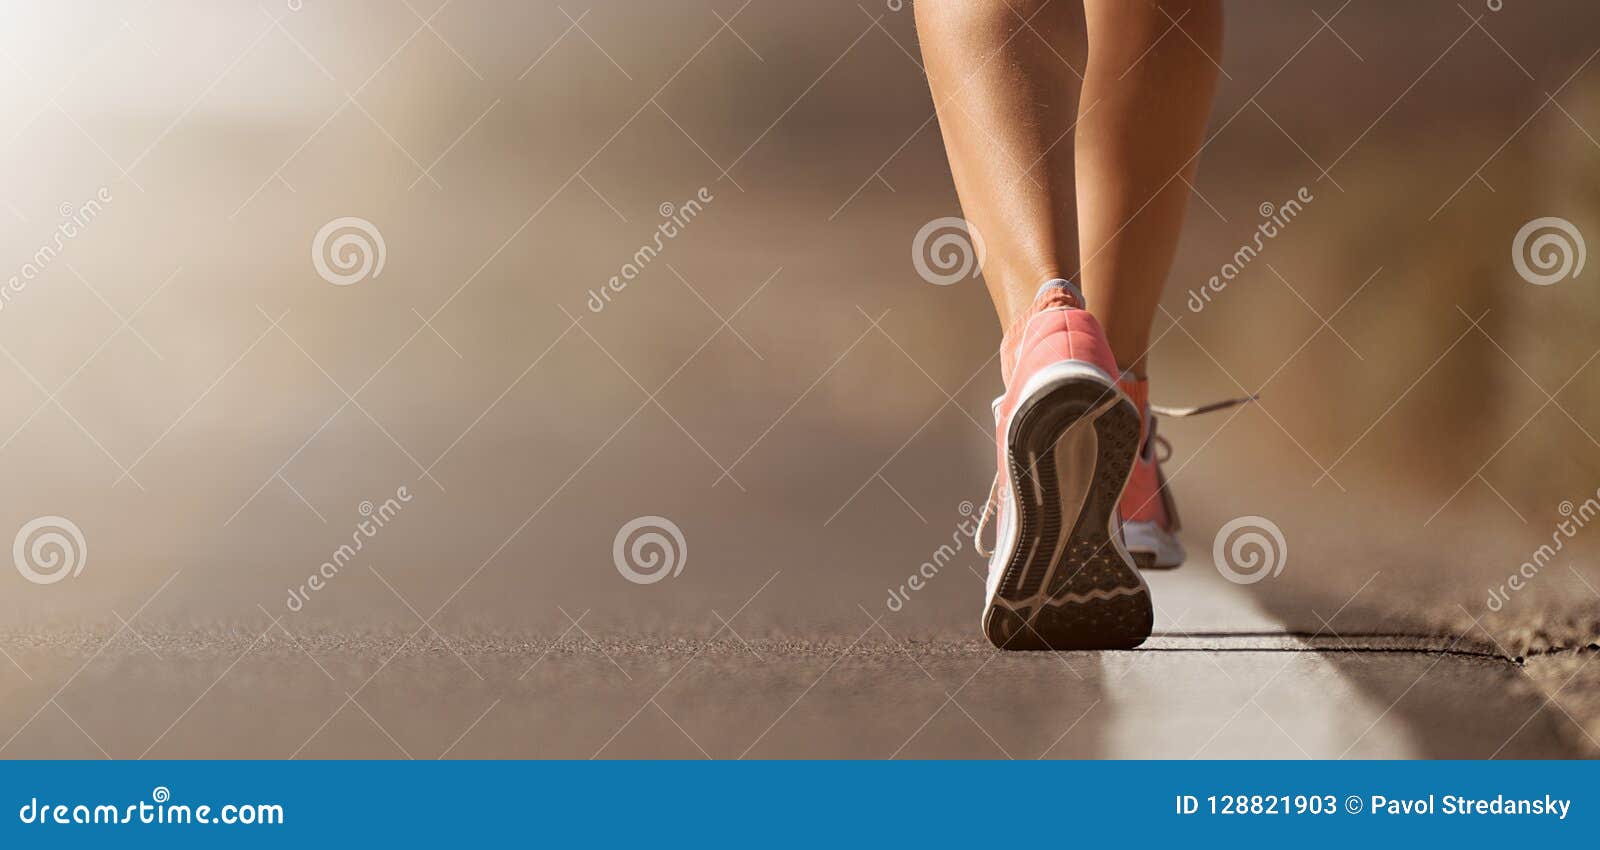 running shoe closeup of woman running on road